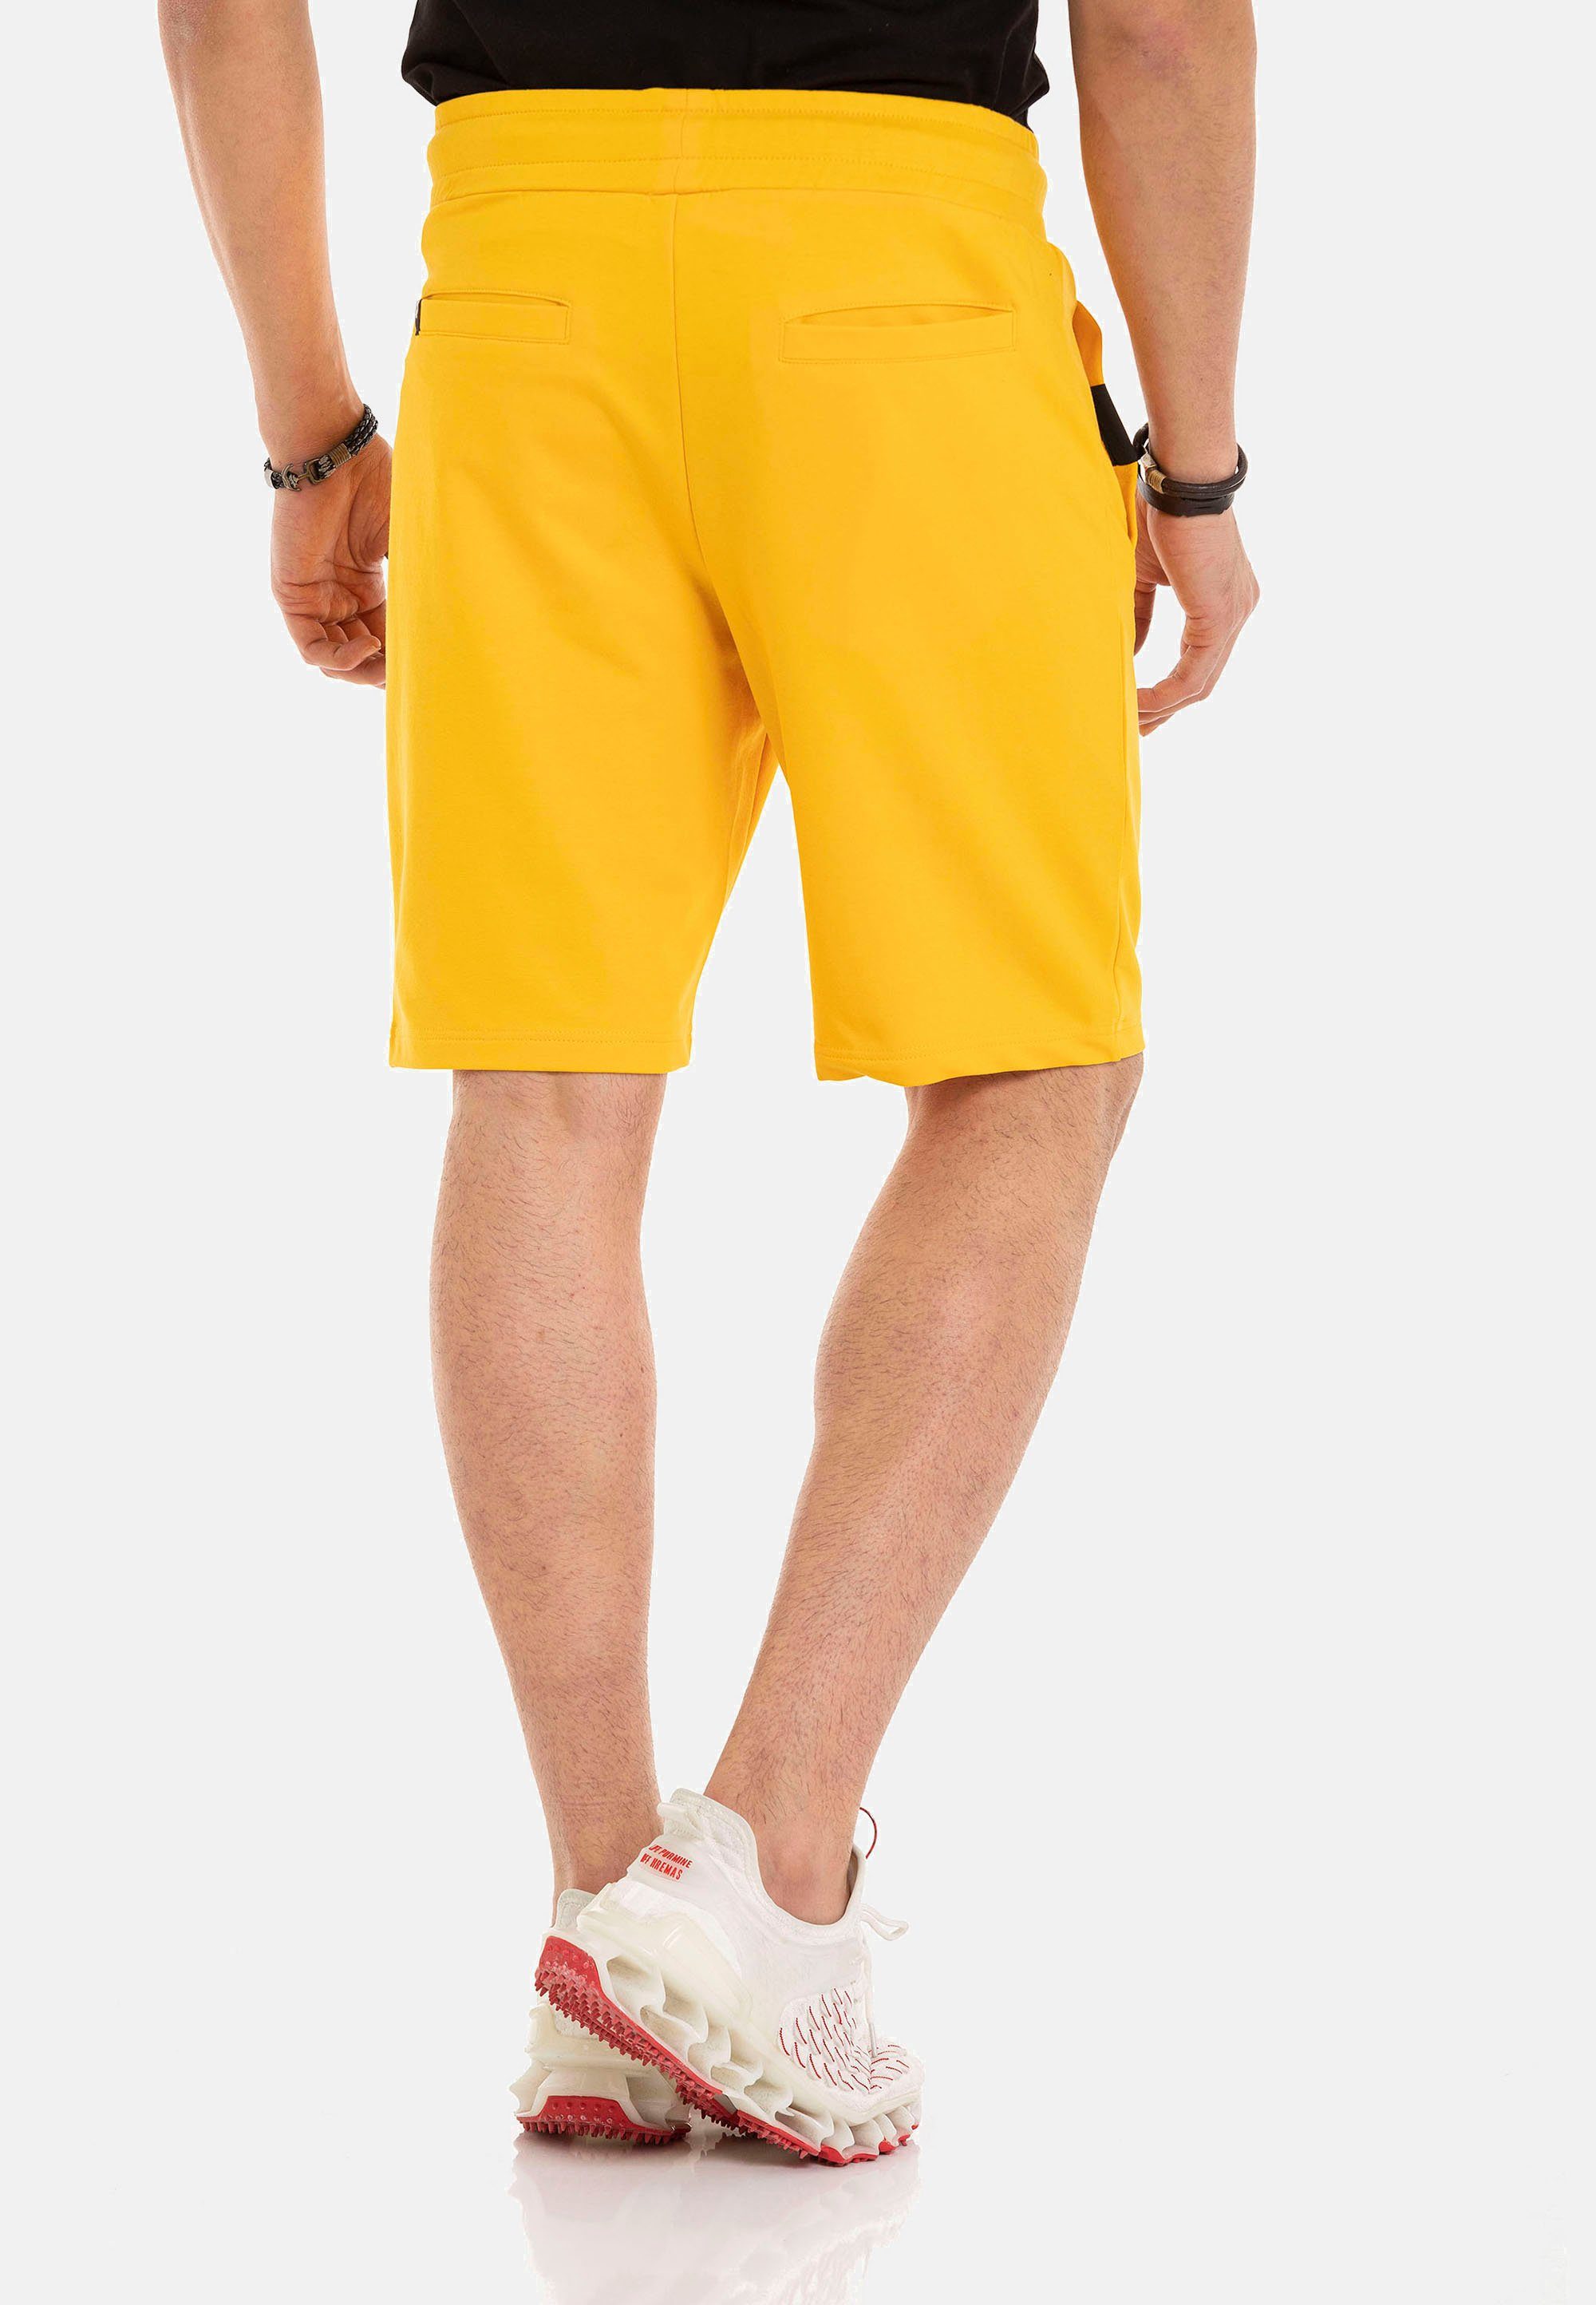 Cipo & Baxx gelb sportlichem in Look Shorts